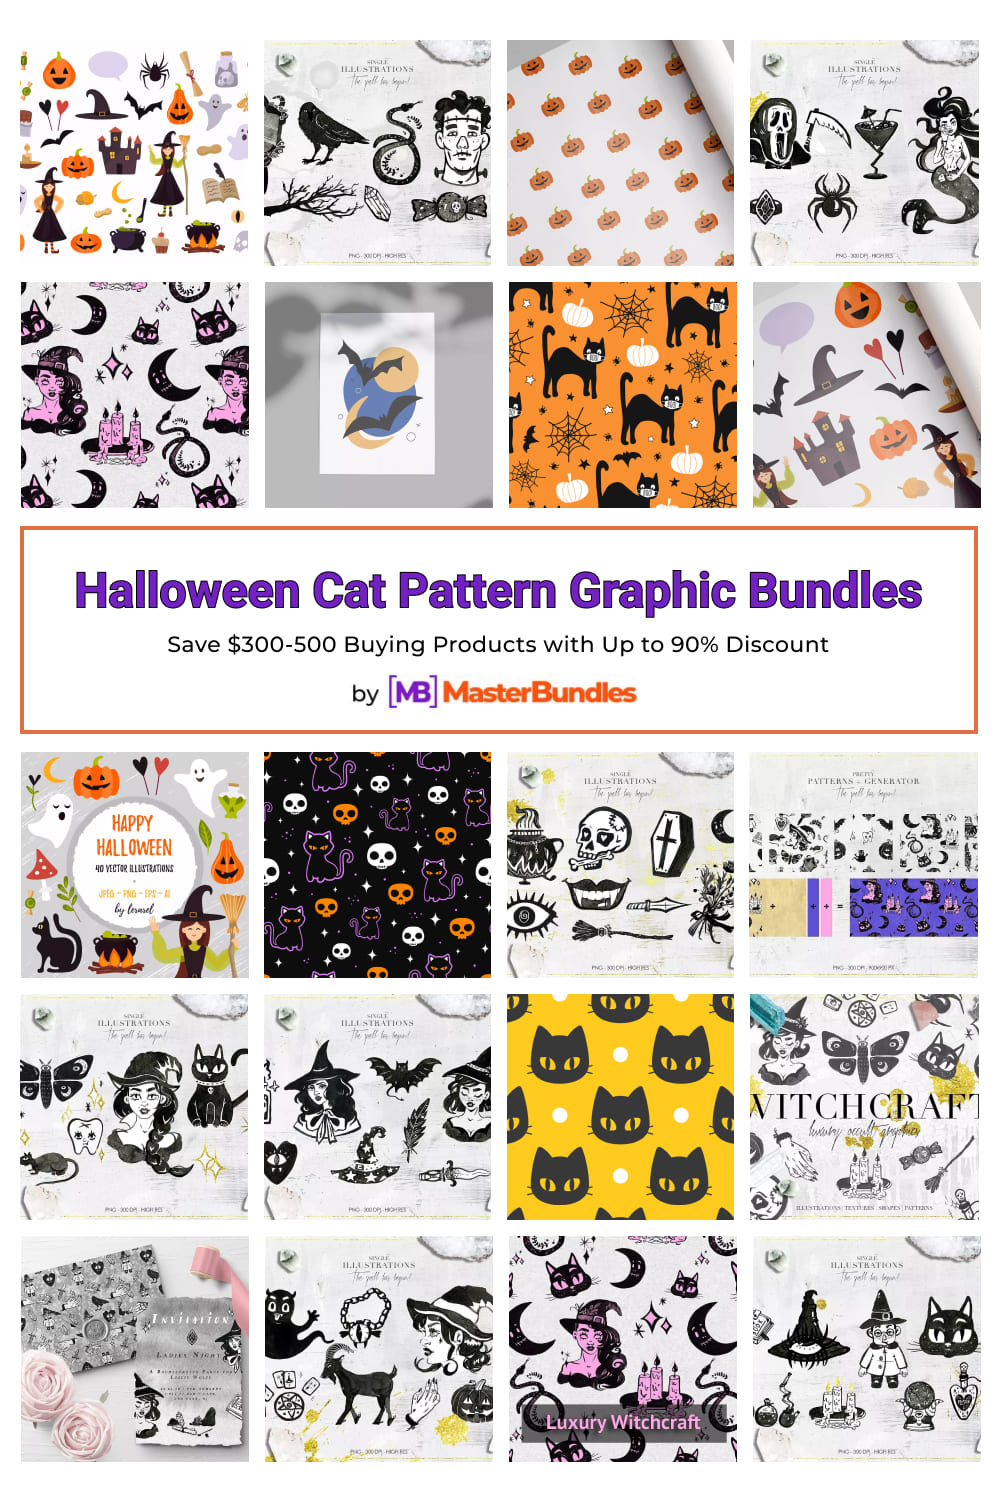 Halloween Cat Pattern Graphic Bundle for Pinterest.